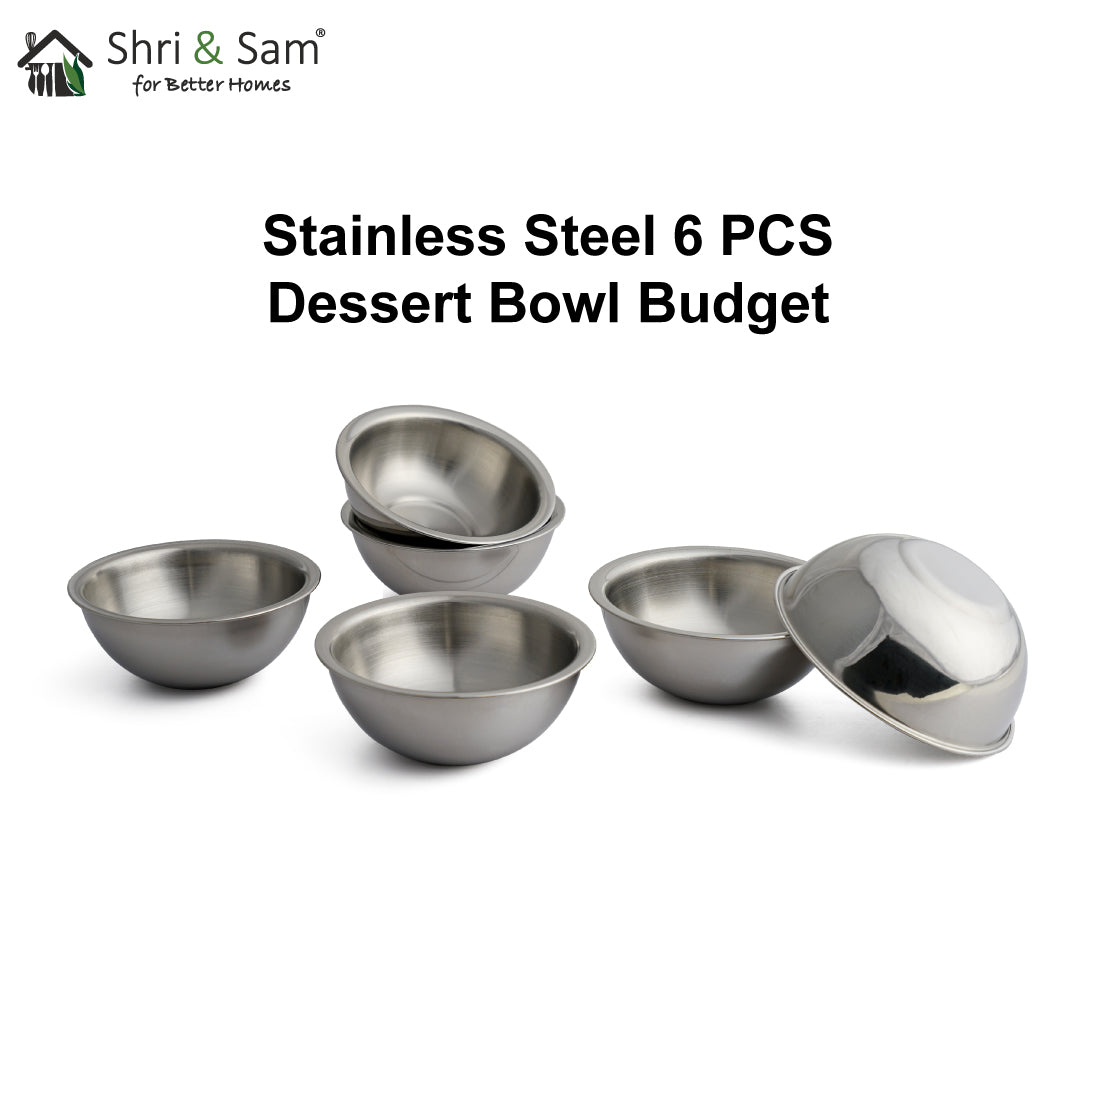 Stainless Steel 6 PCS Dessert Bowl Budget